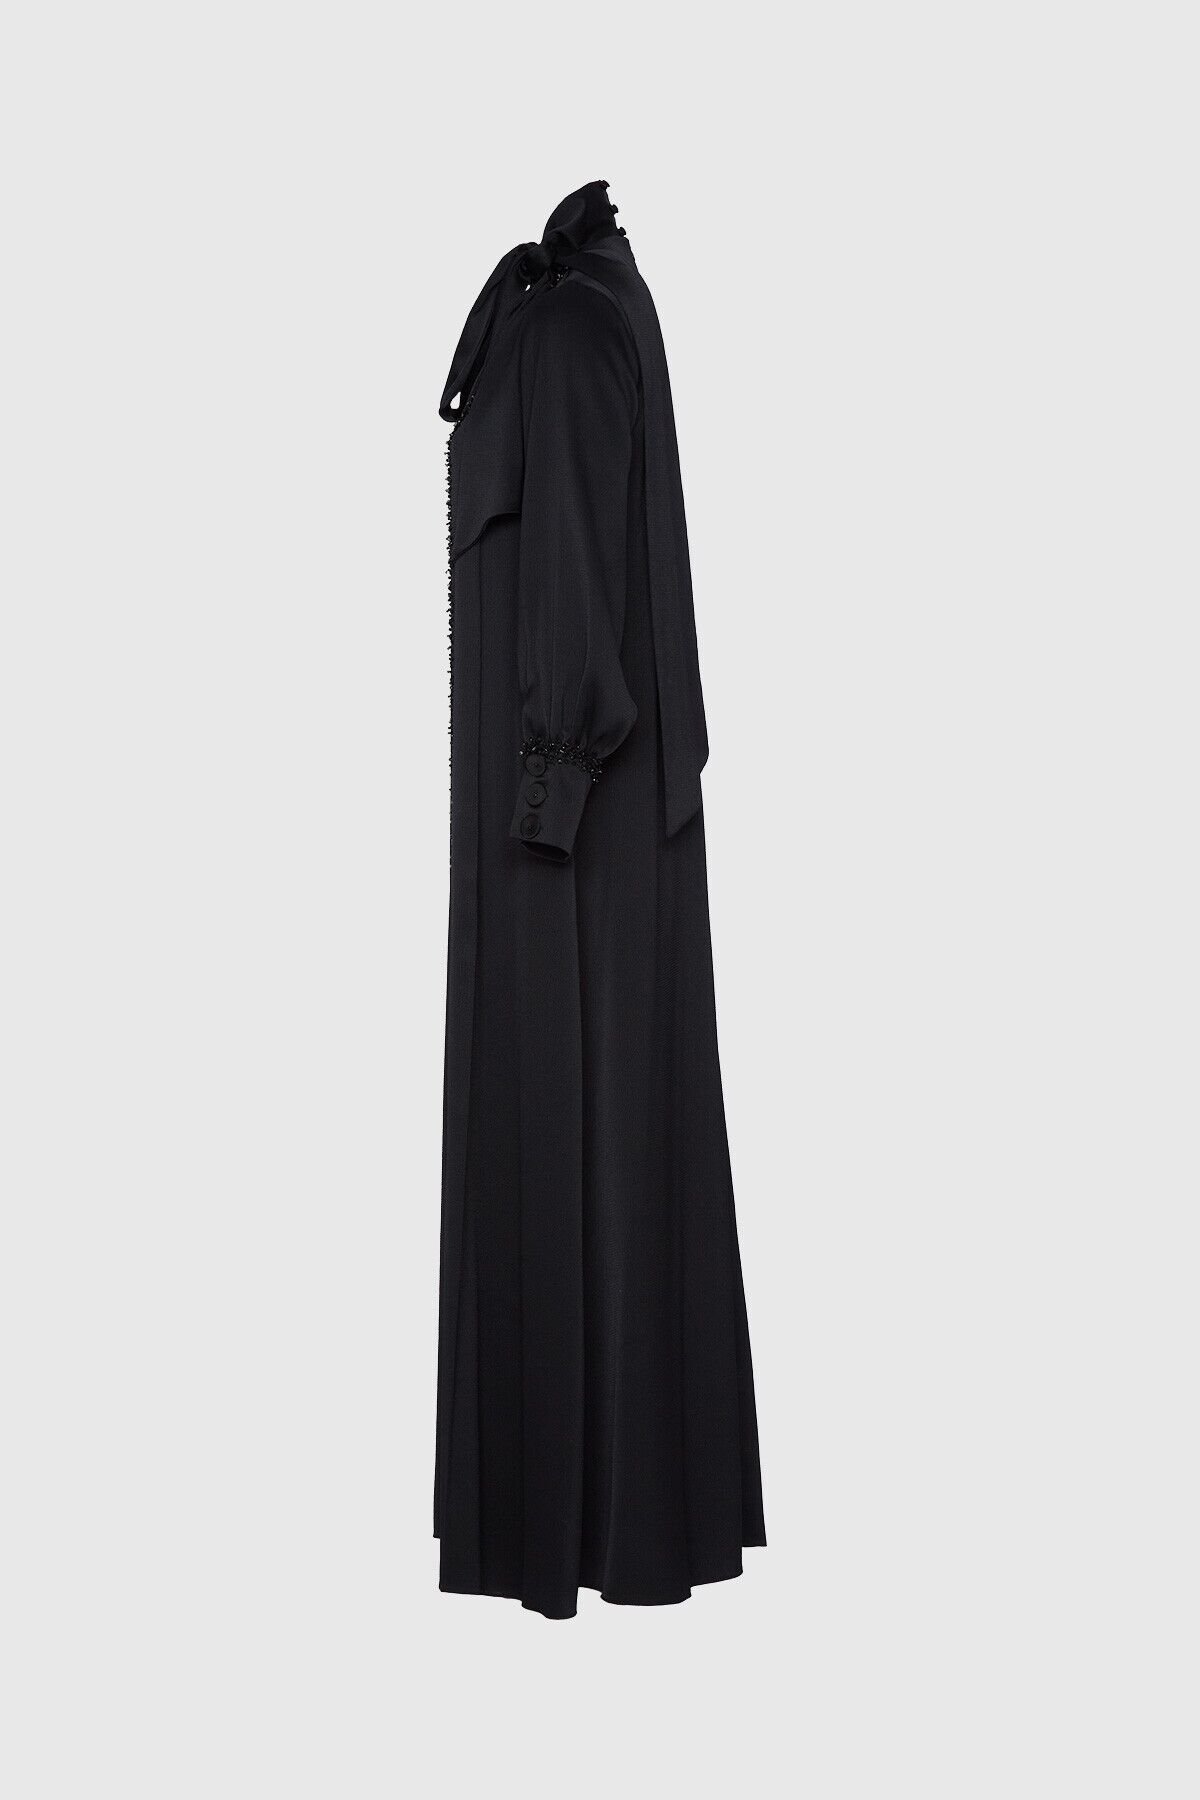 Neck Tie Detailed Long Black Dress